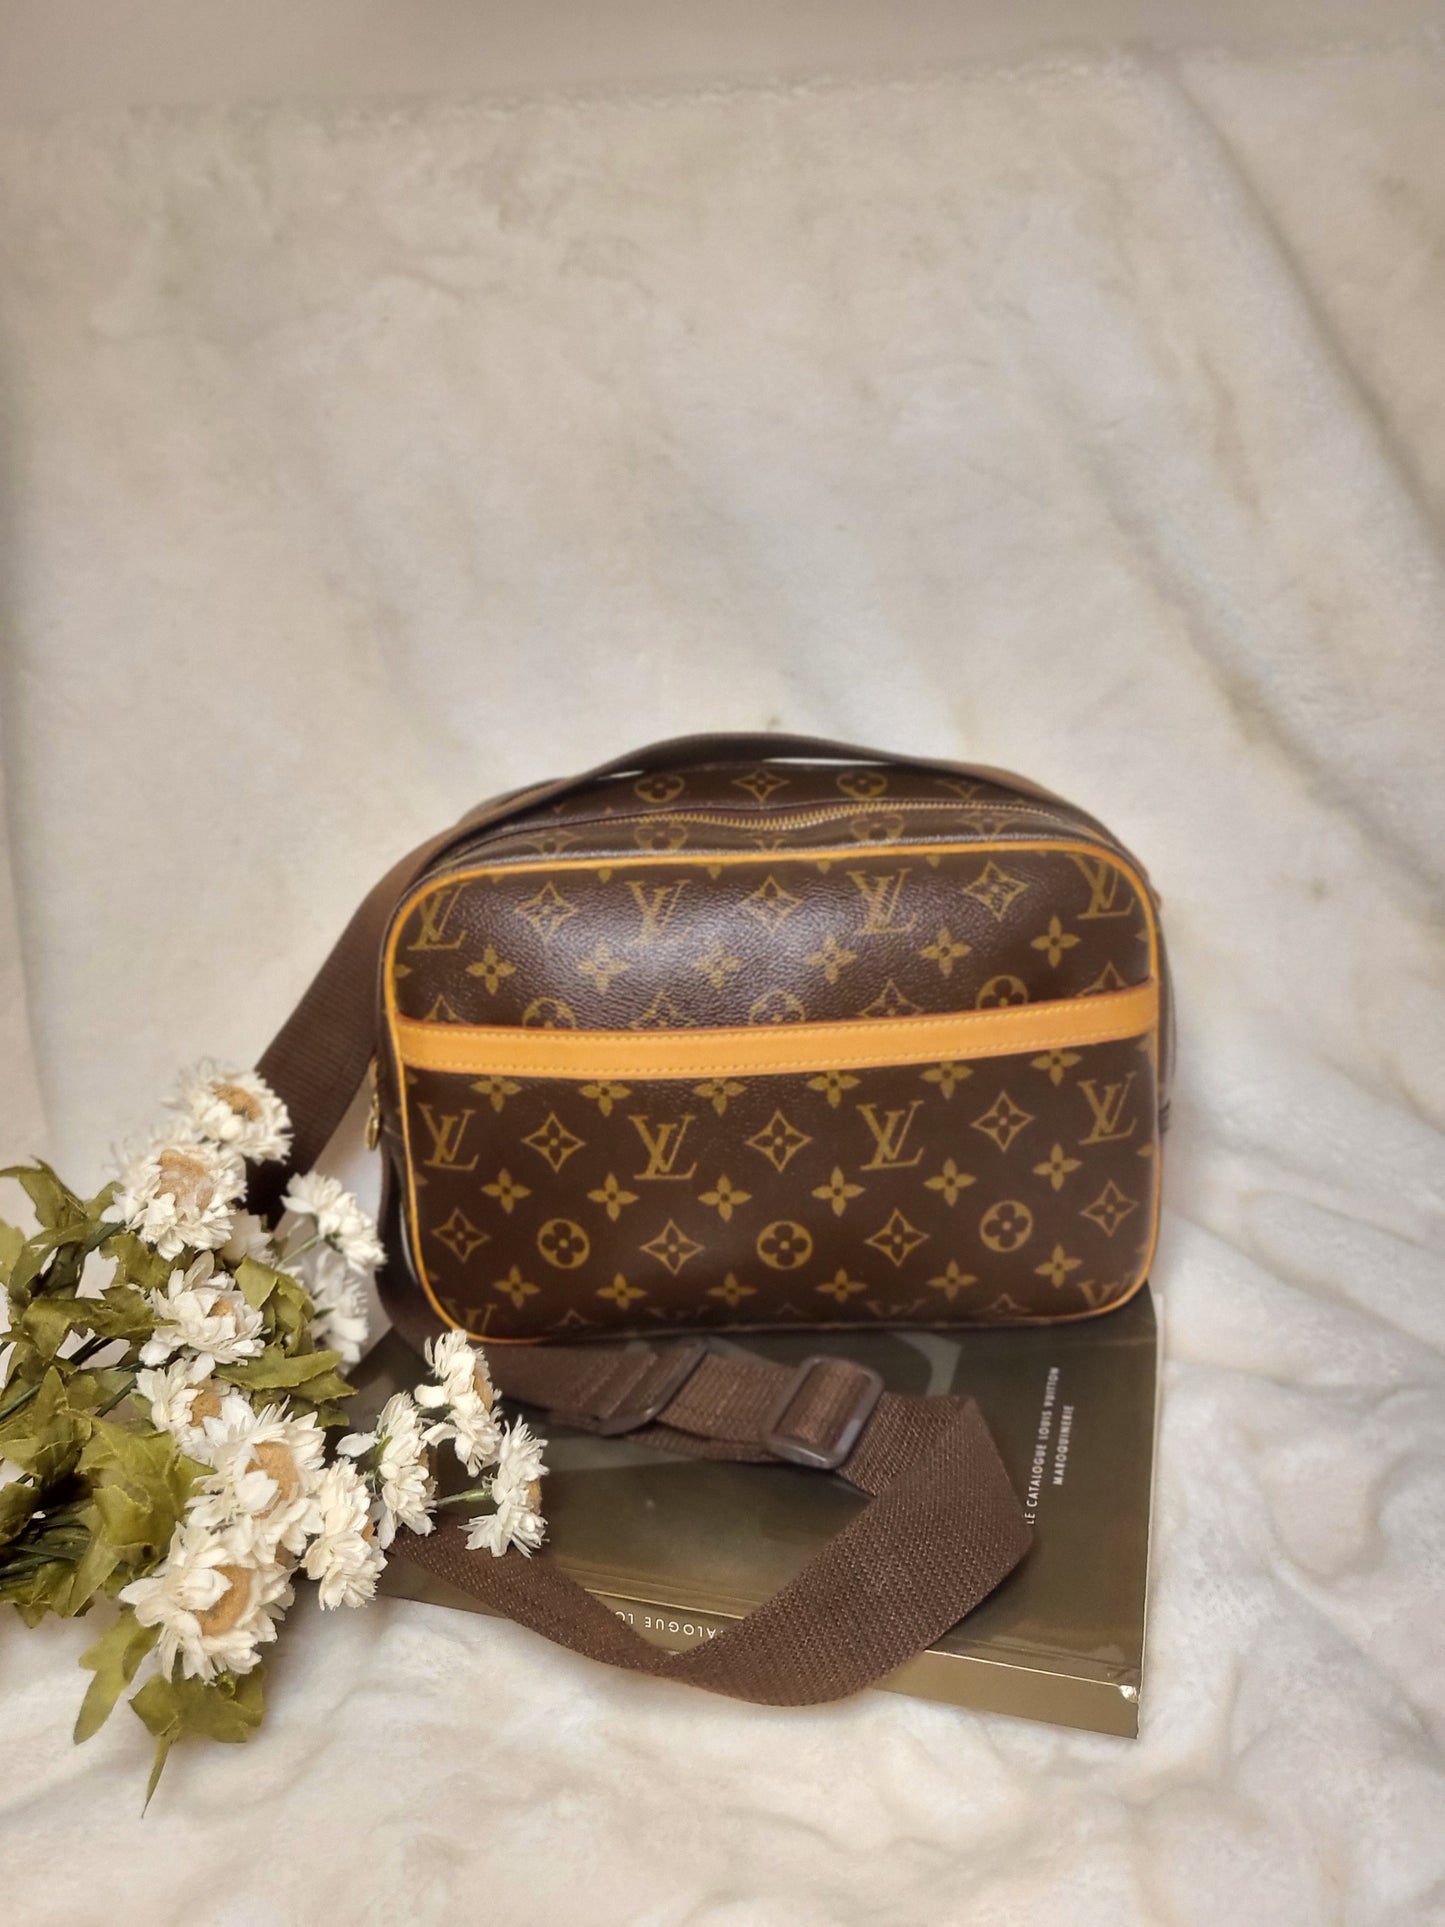 Authentic pre-owned Louis Vuitton Reporter pm crossbody shoulder bag